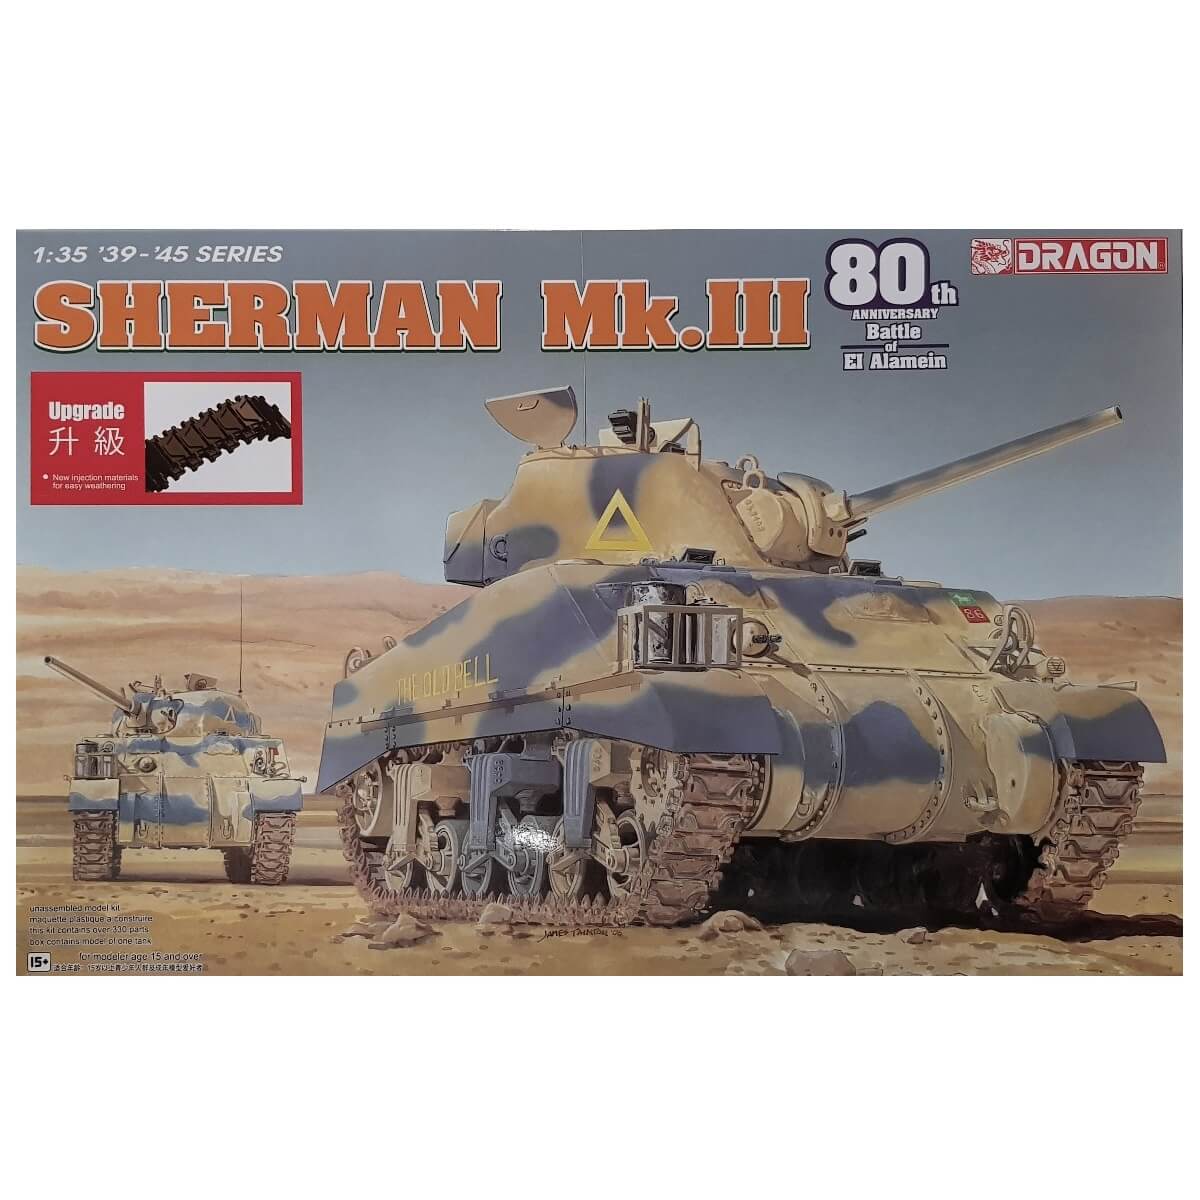 1:35 Sherman Mk.III - 80th anniversary Battle of El Alamein - DRAGON